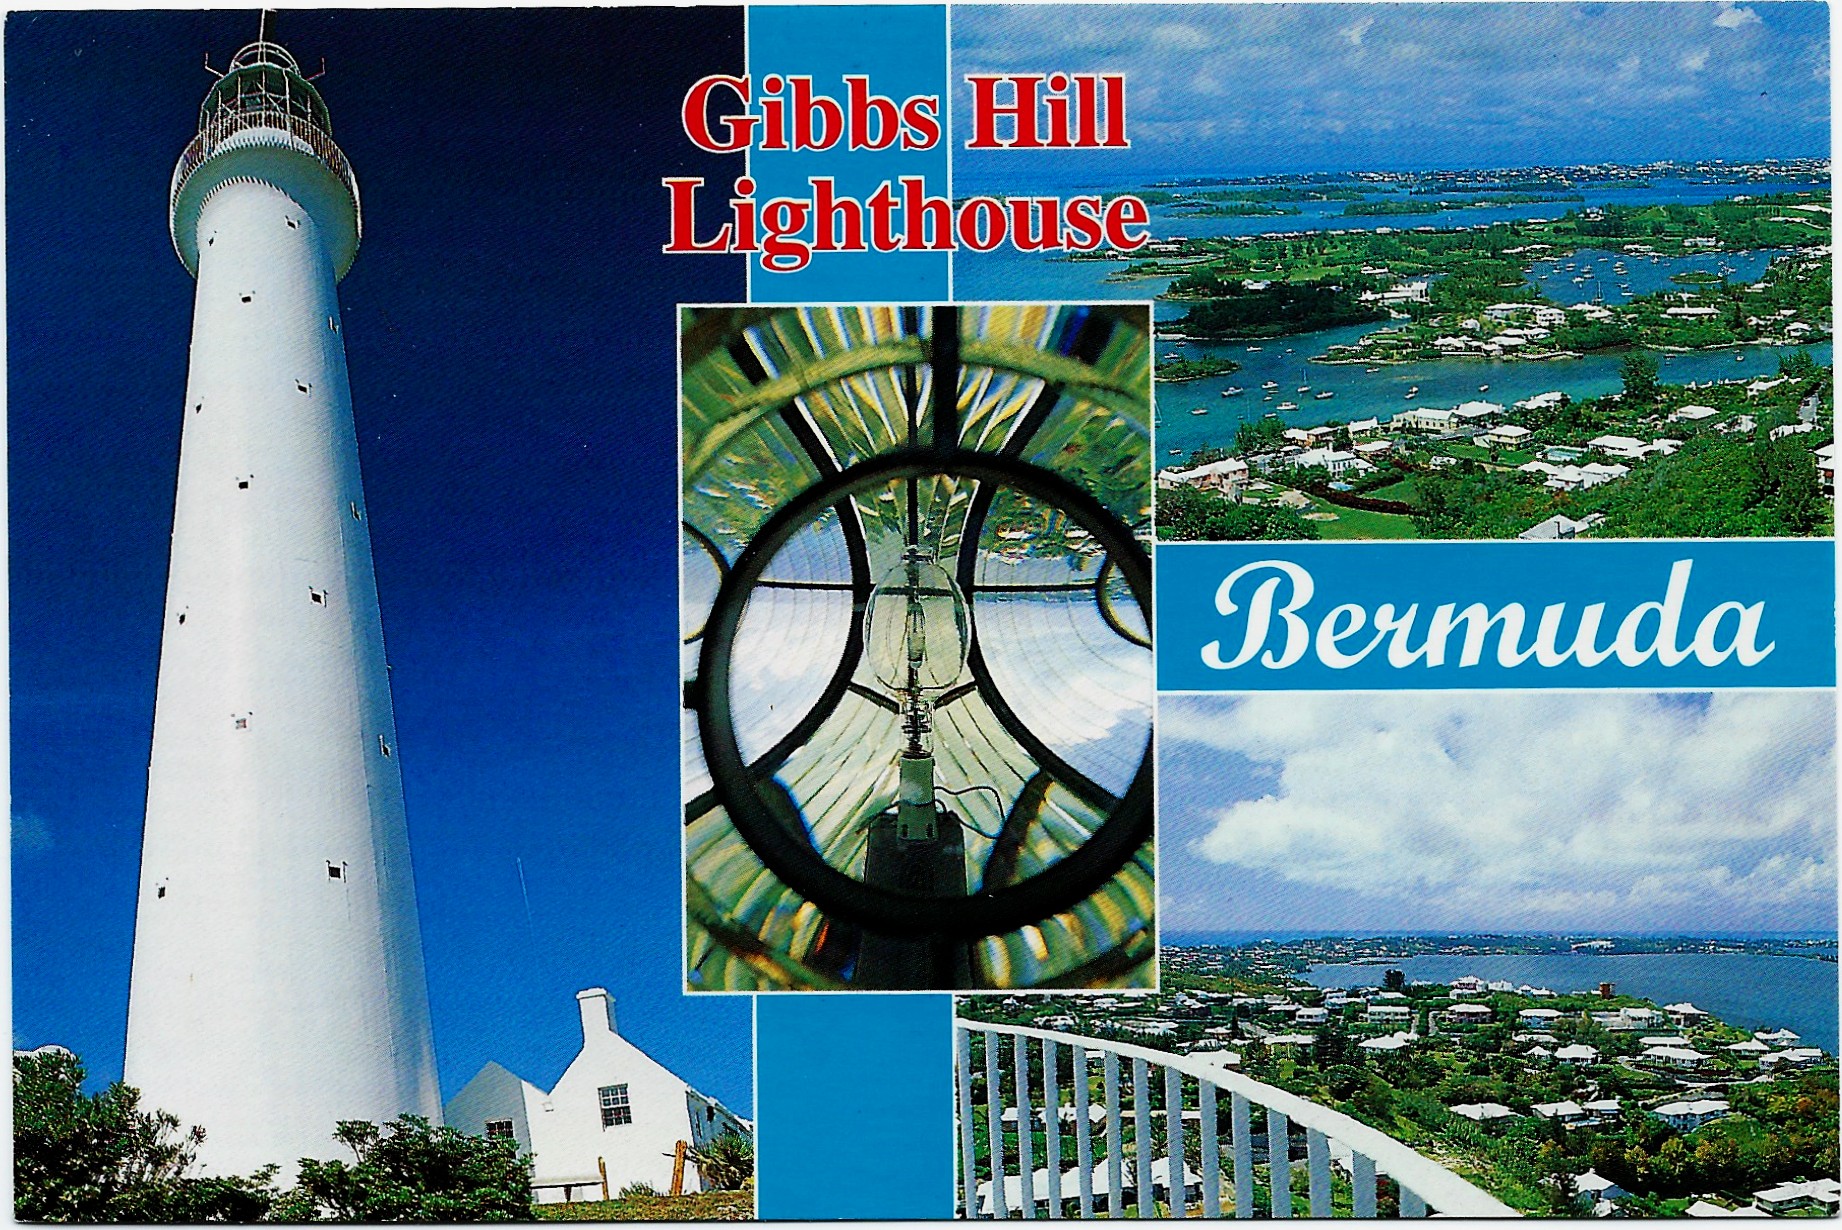 Gibbs Hill Lighthouse Bermuda Postcard BDA-439 (BM)